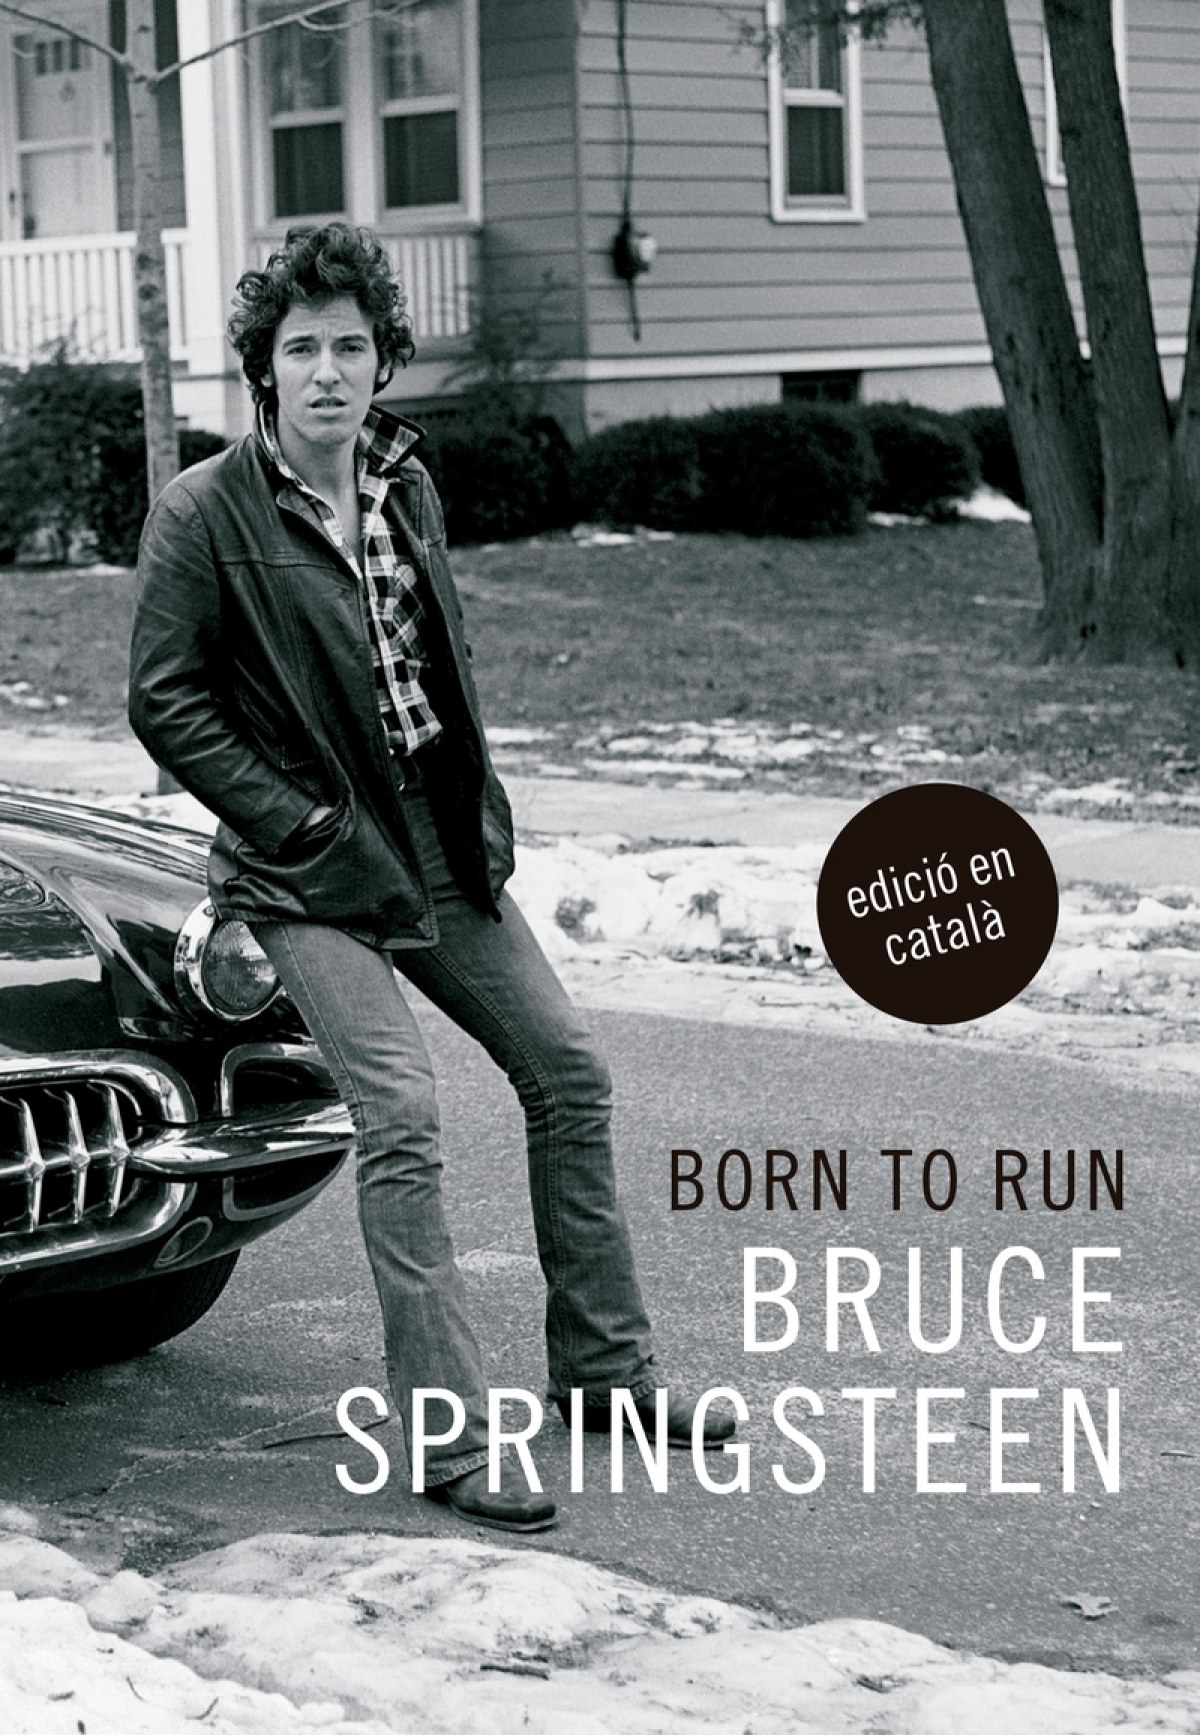 Born to run - Springsteen, Bruce